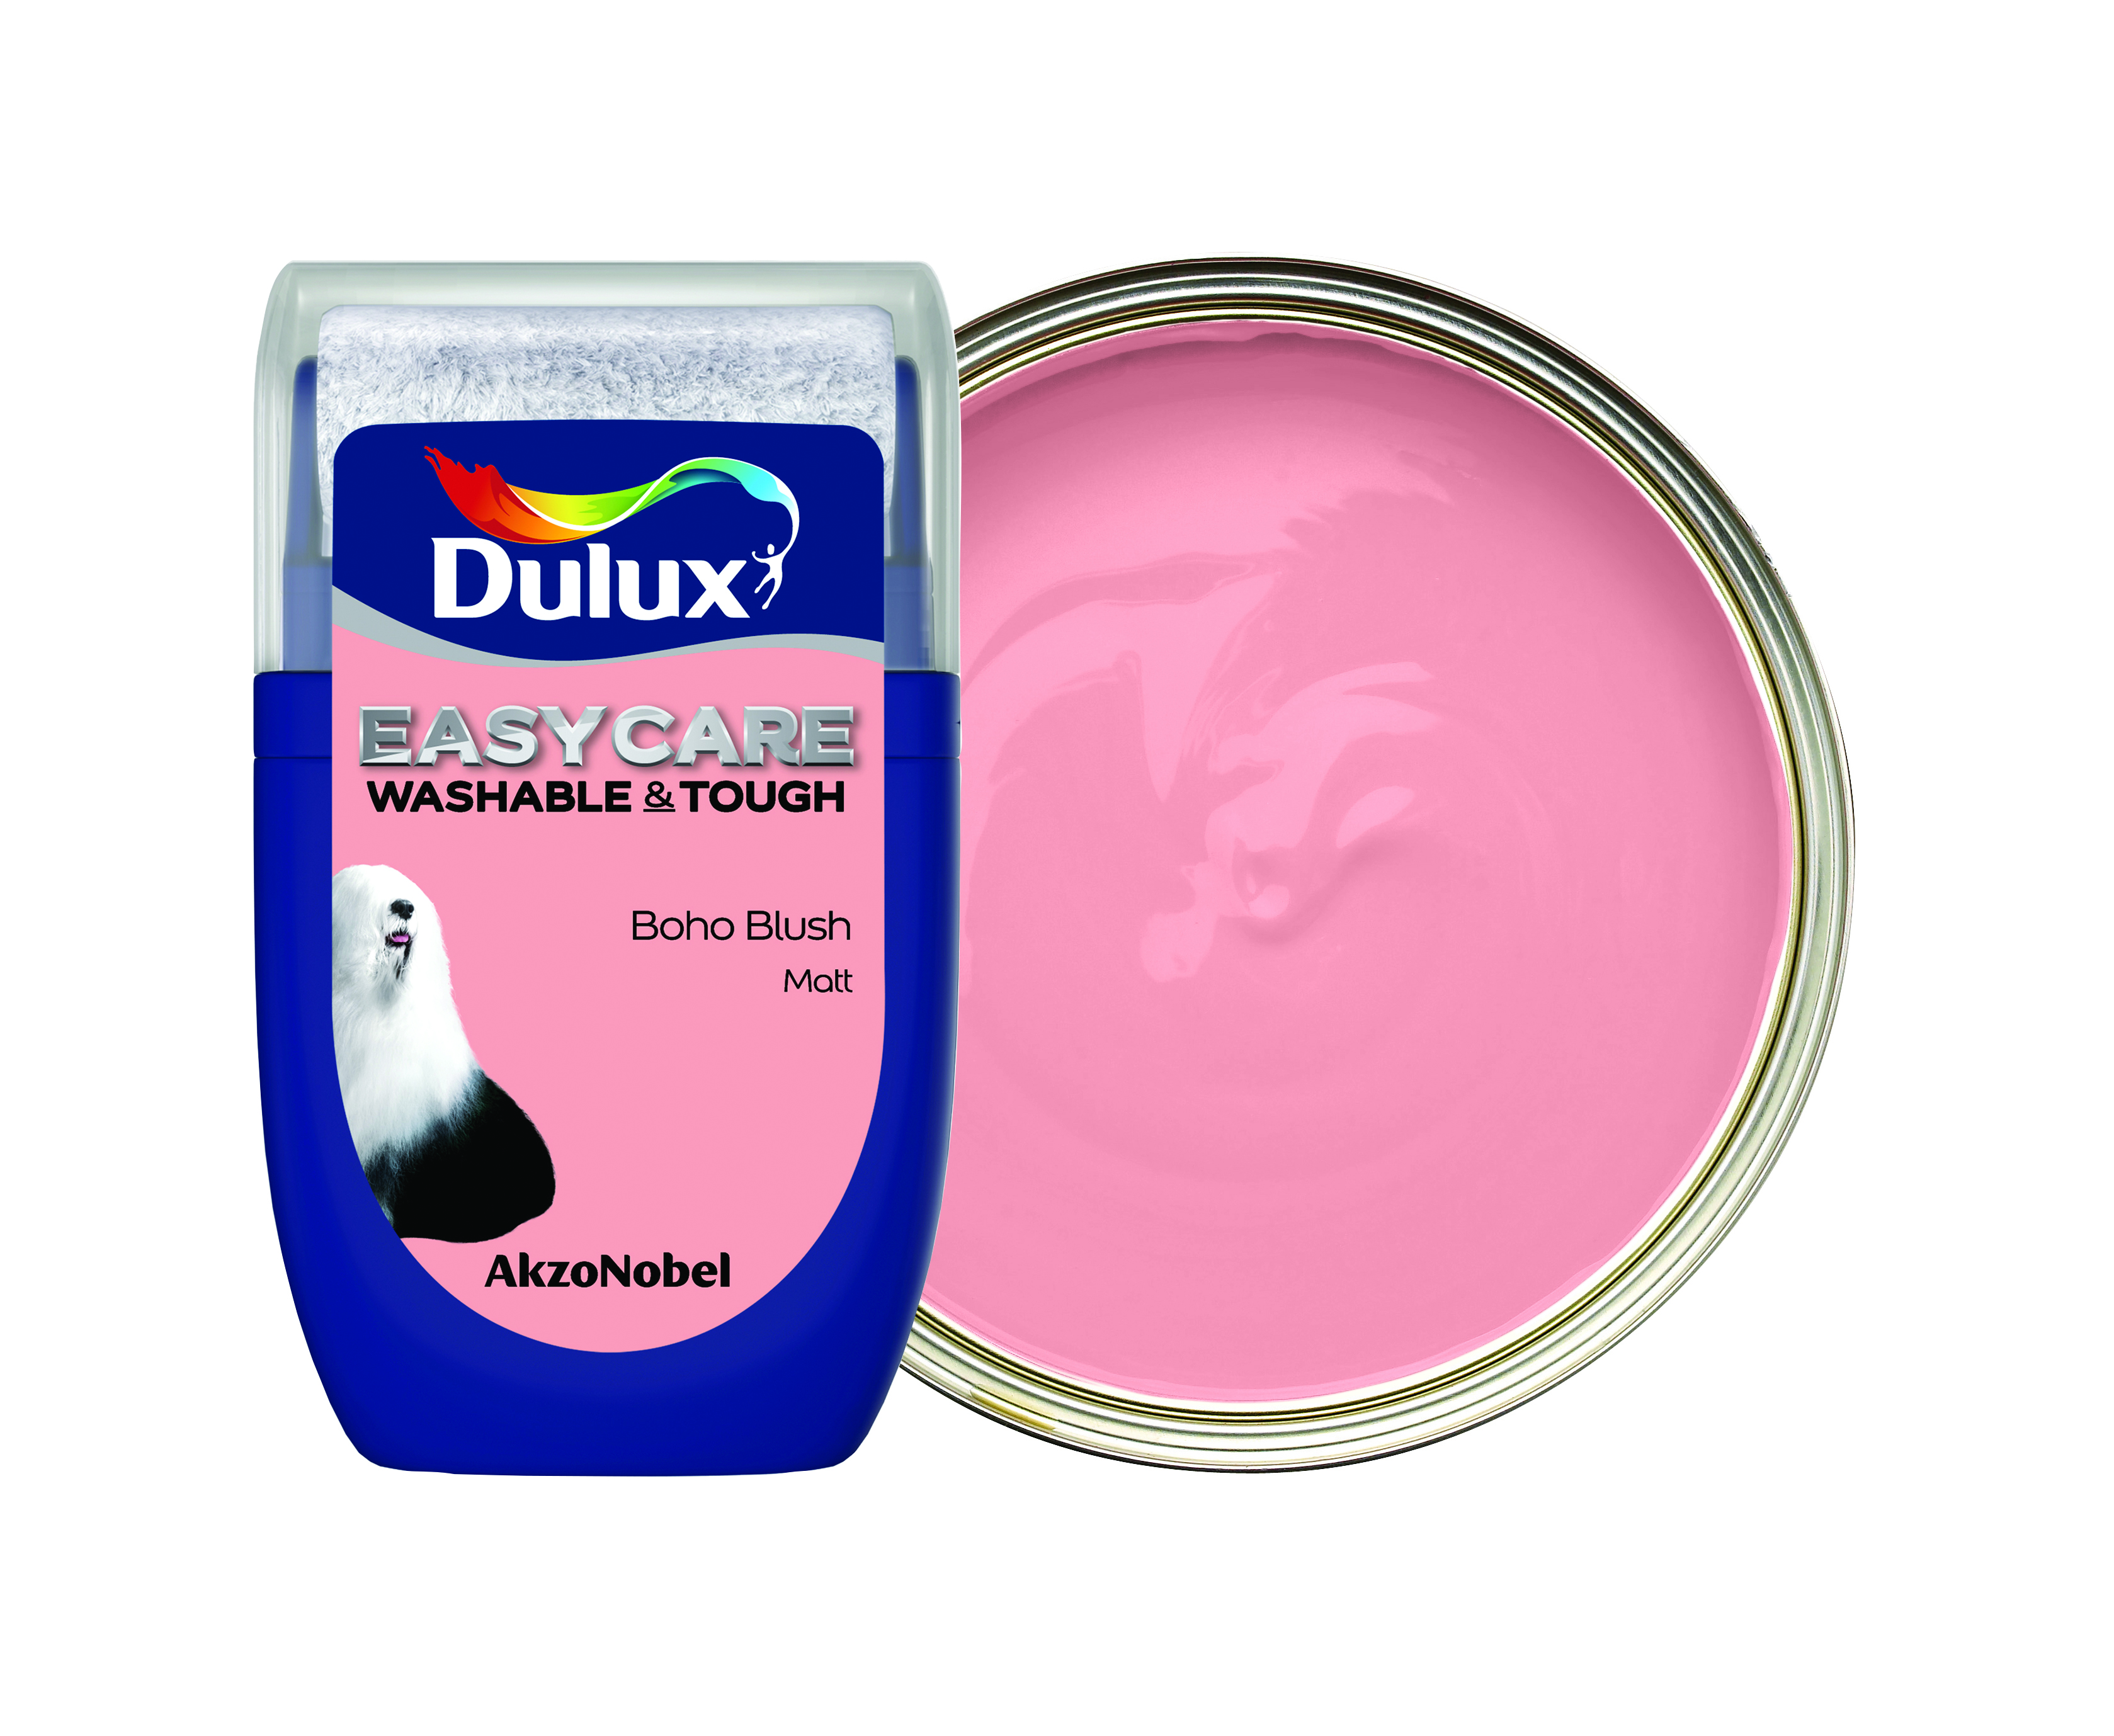 Dulux Easycare Washable & Tough Paint Tester Pot - Boho Blush - 30ml